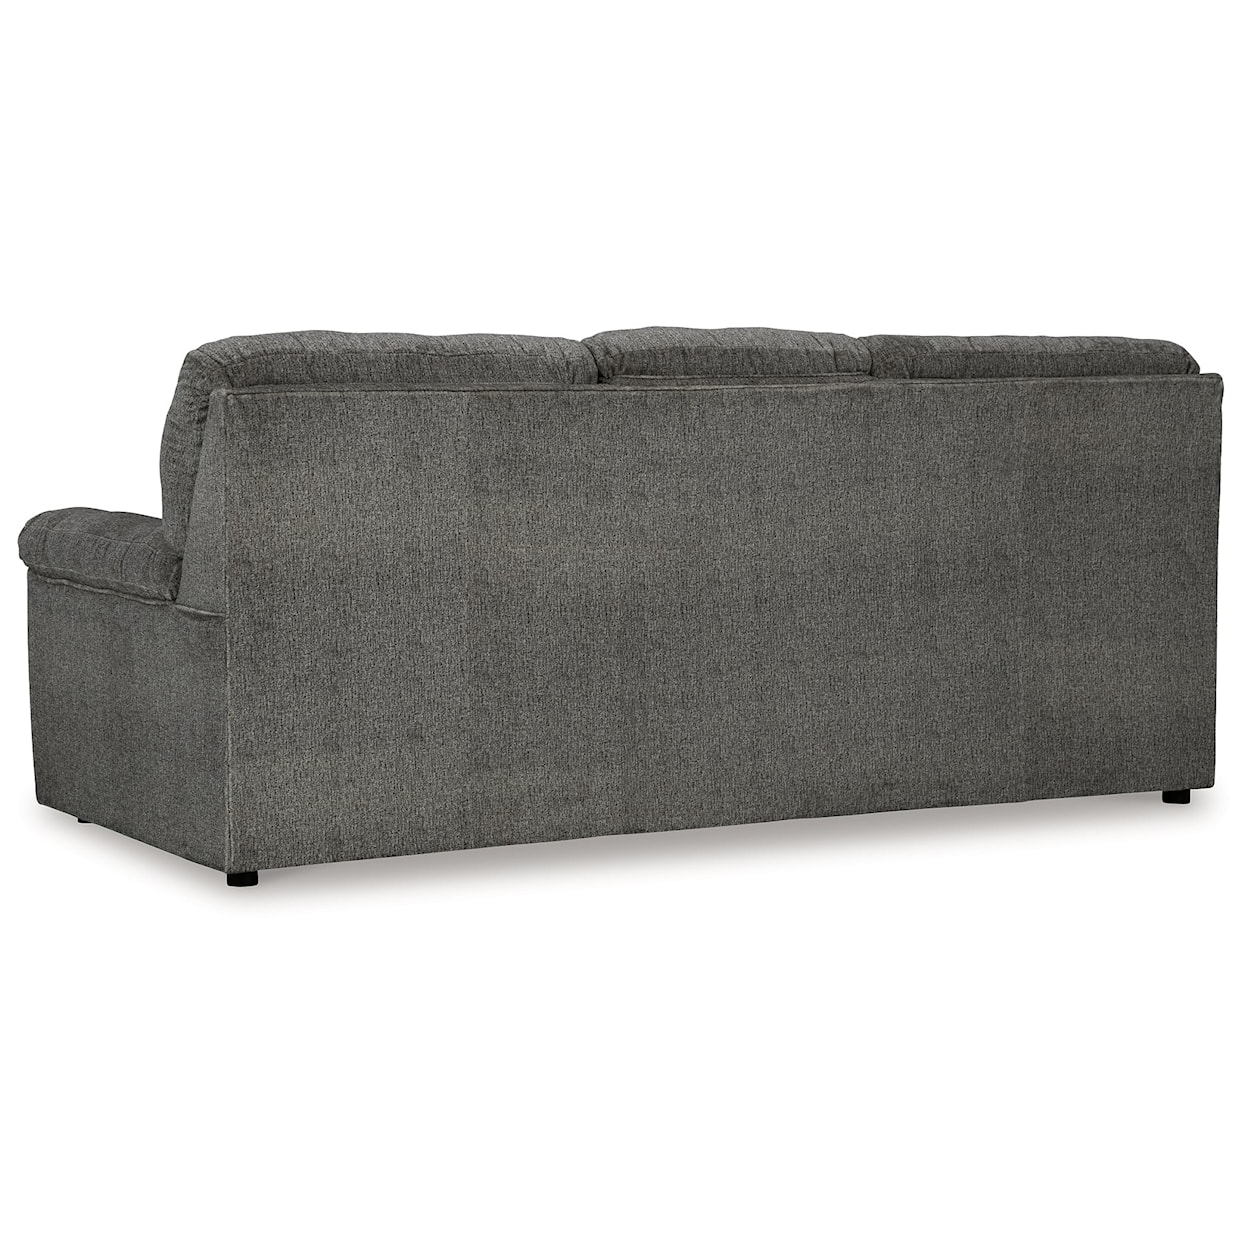 Ashley Furniture Signature Design Bindura Sofa with Drop Down Table